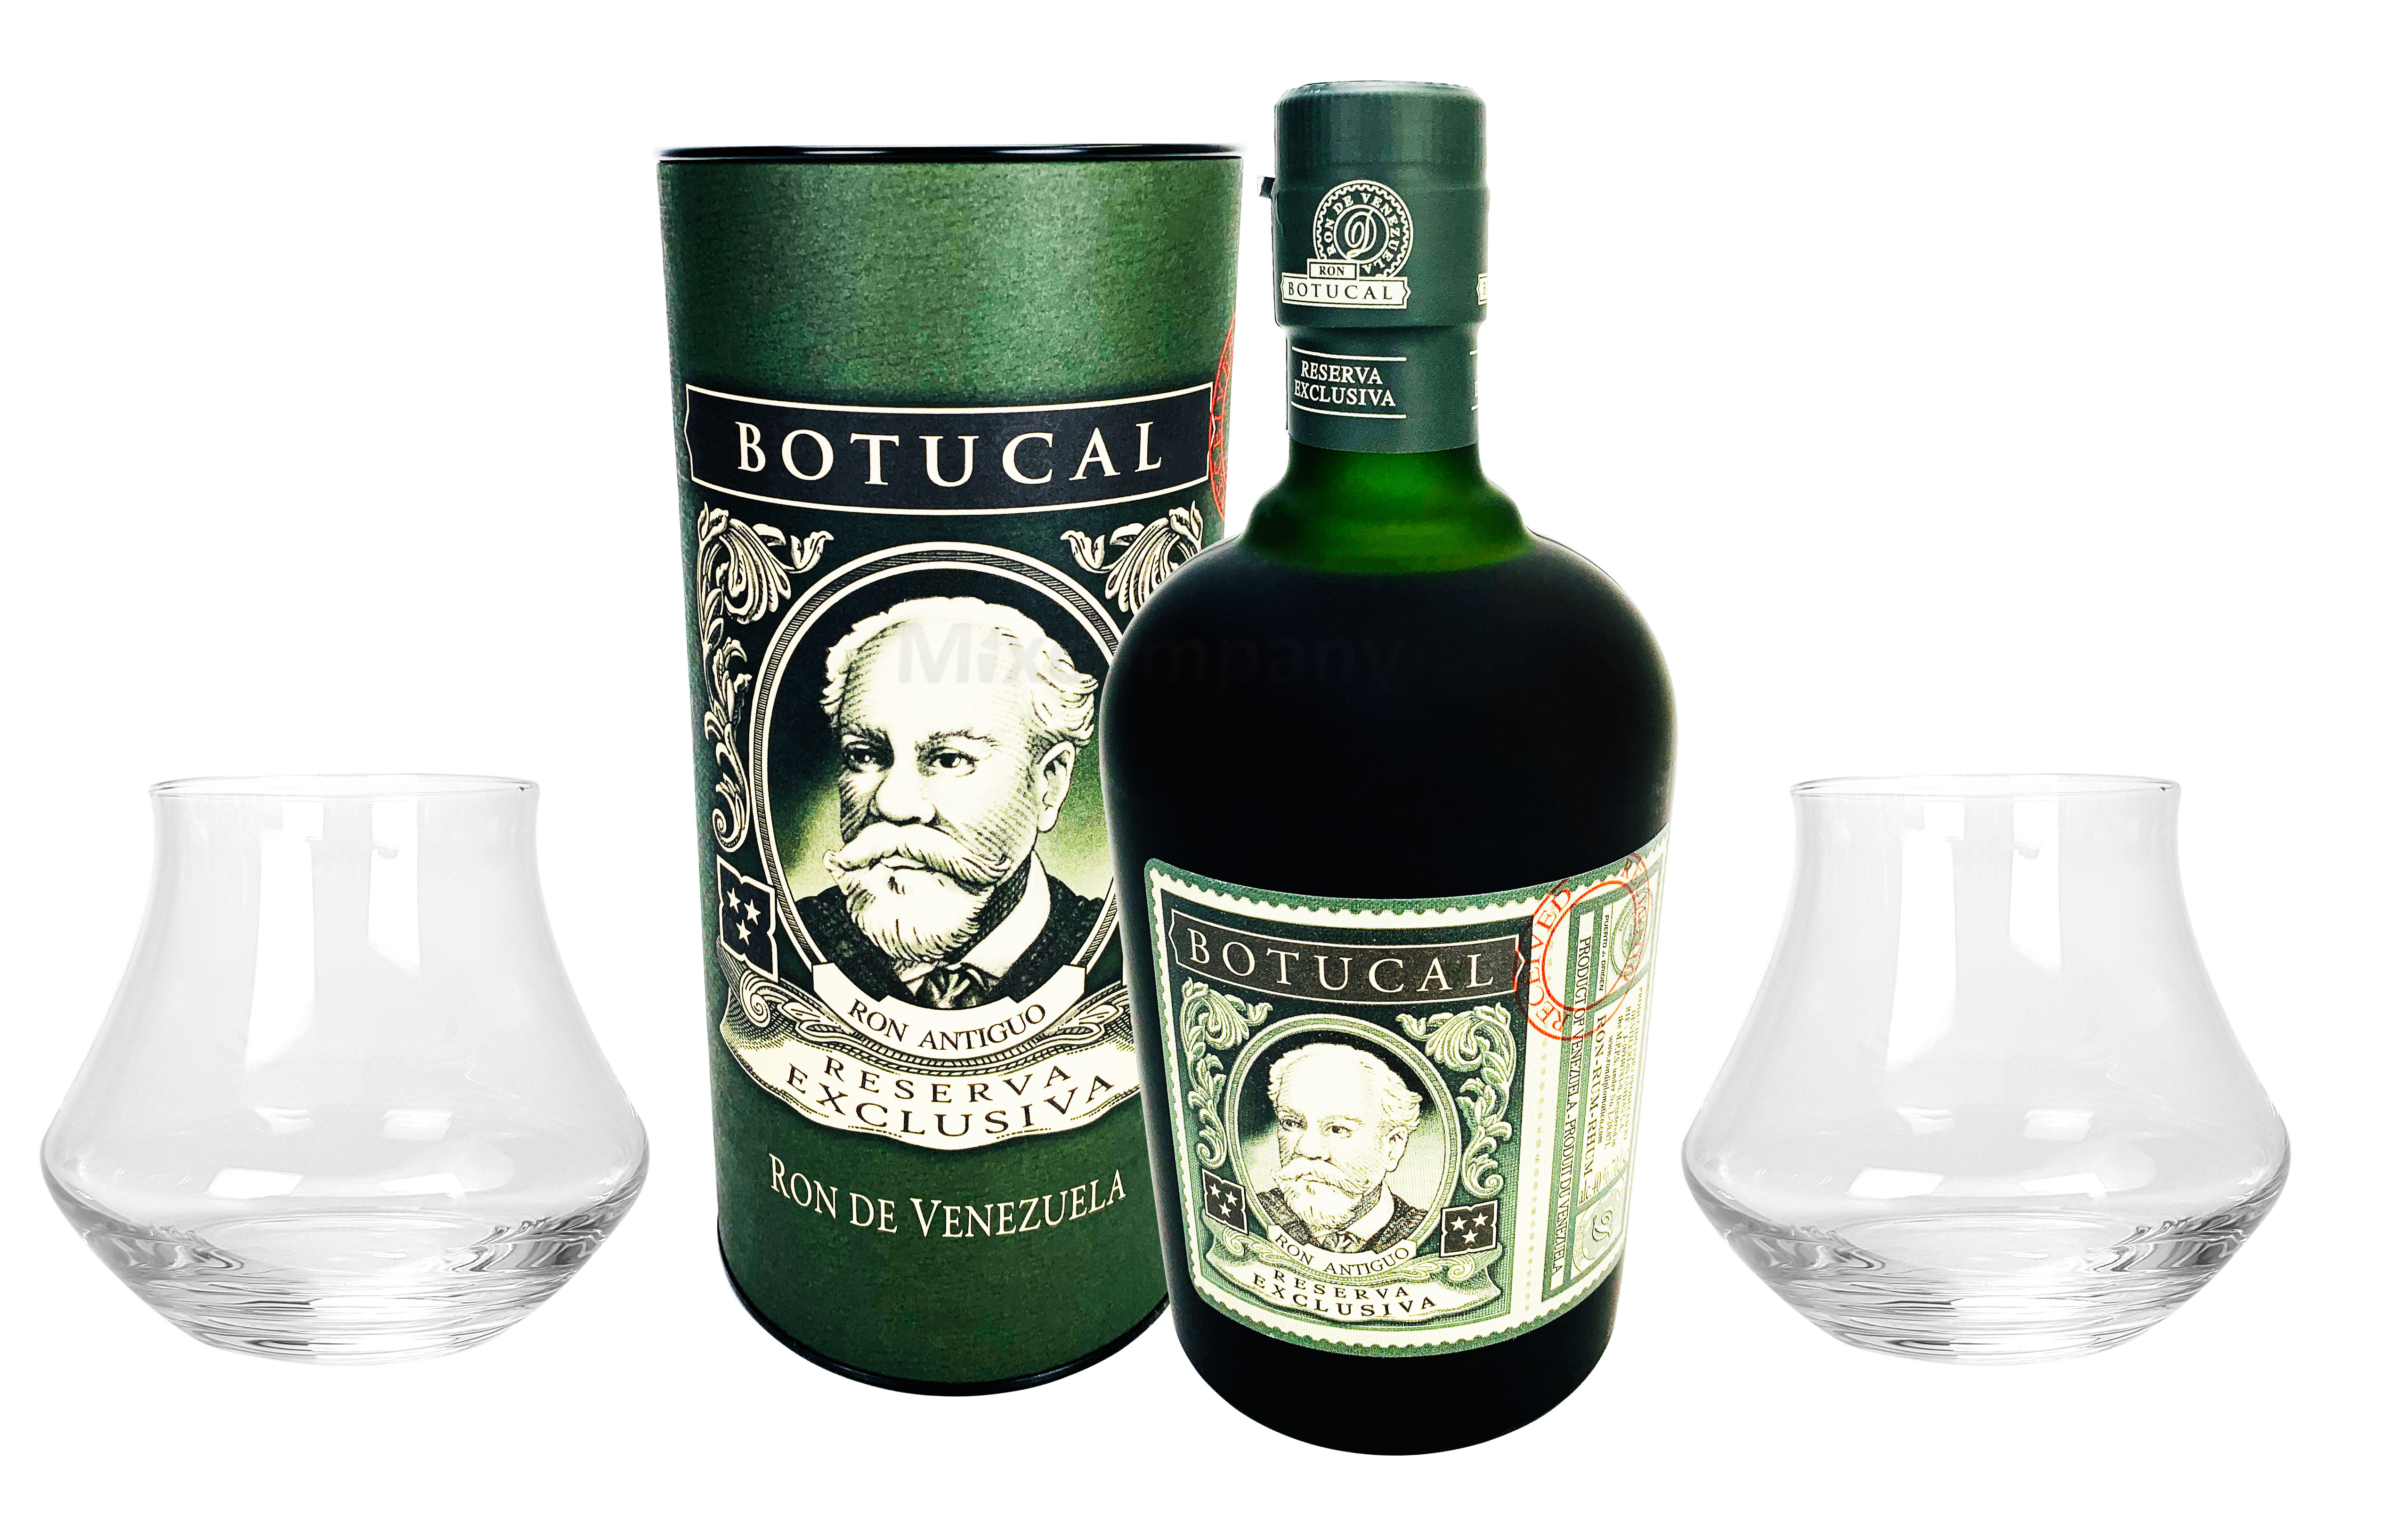 Botucal Reserva Exclusiva Rum mit Geschenkverpackung 2 Botucal Tumbler Gläser mit 0,70l (40% Vol) Ron de Venezuela Glas Longdrinkglas - Set - [Enthält Sulfite]